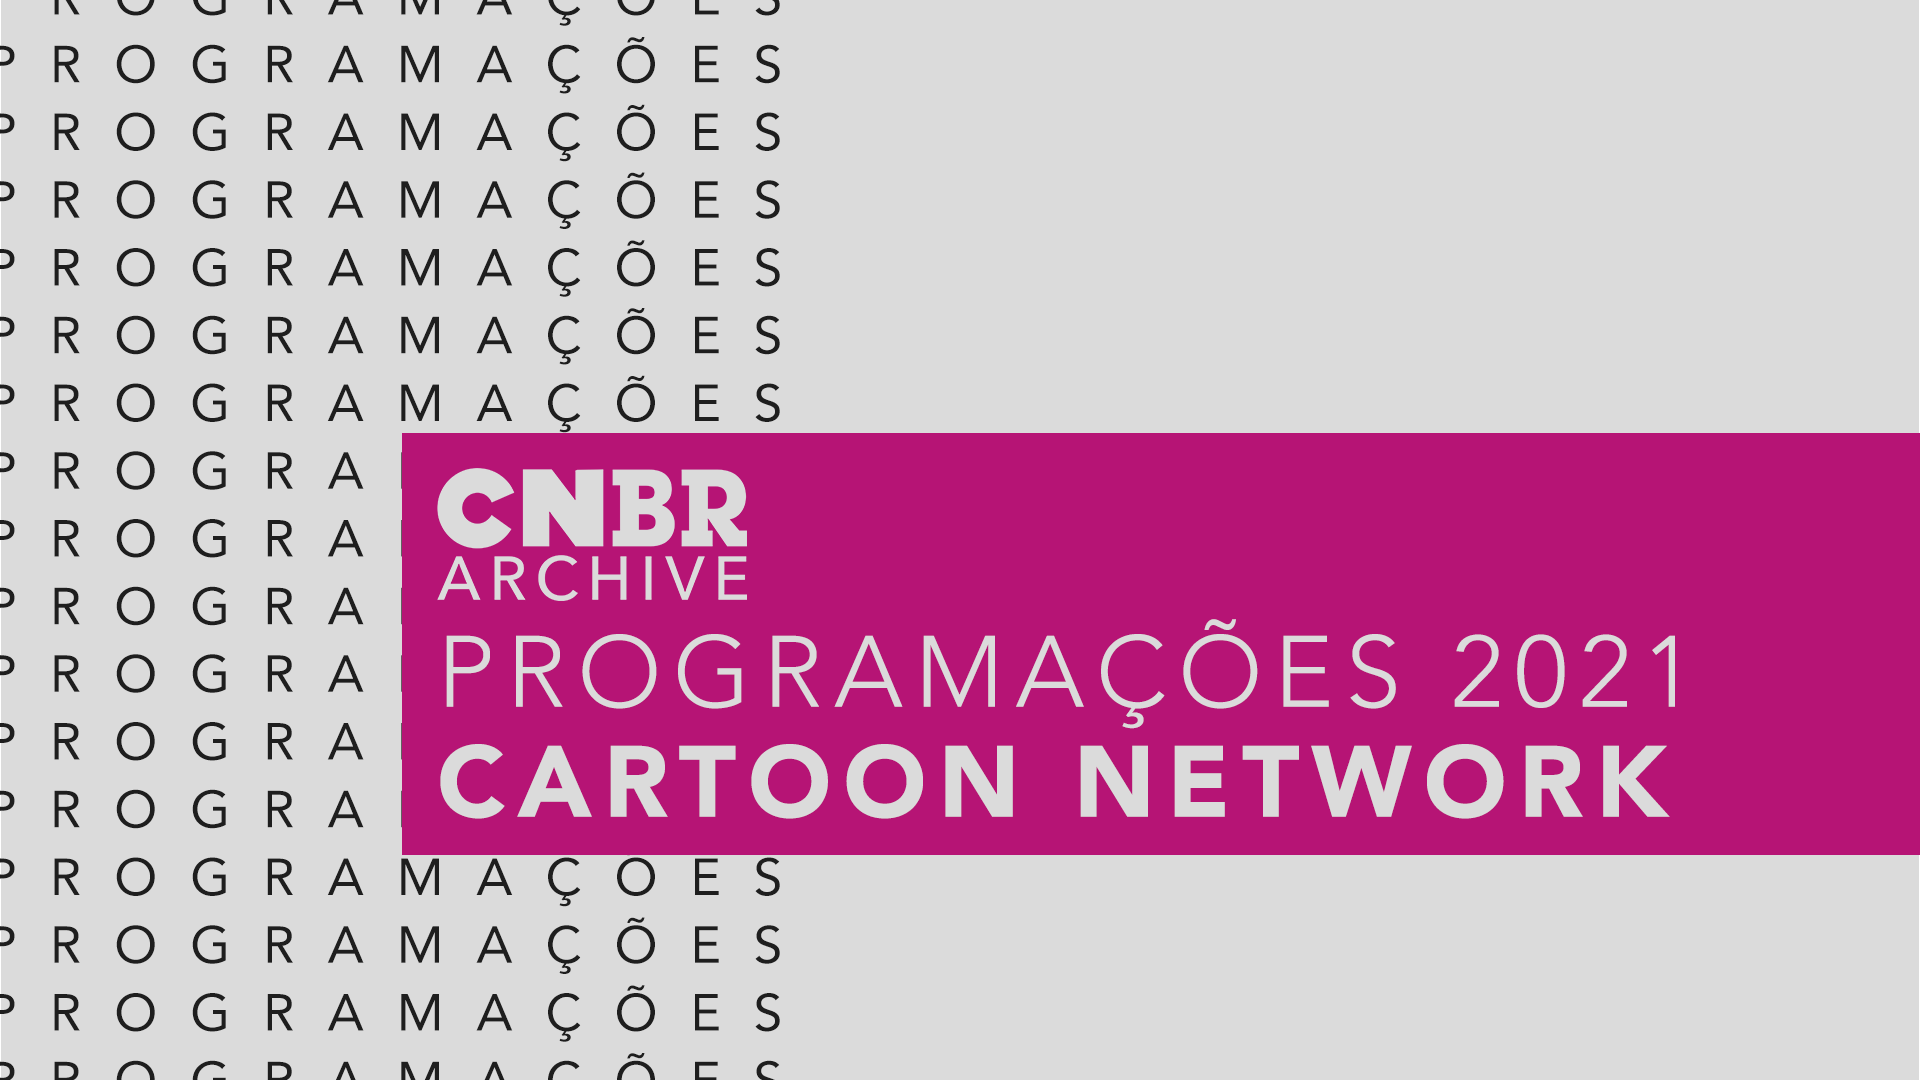 PROGRAMAÇÕES CARTOON NETWORK BRASIL 2021 / X